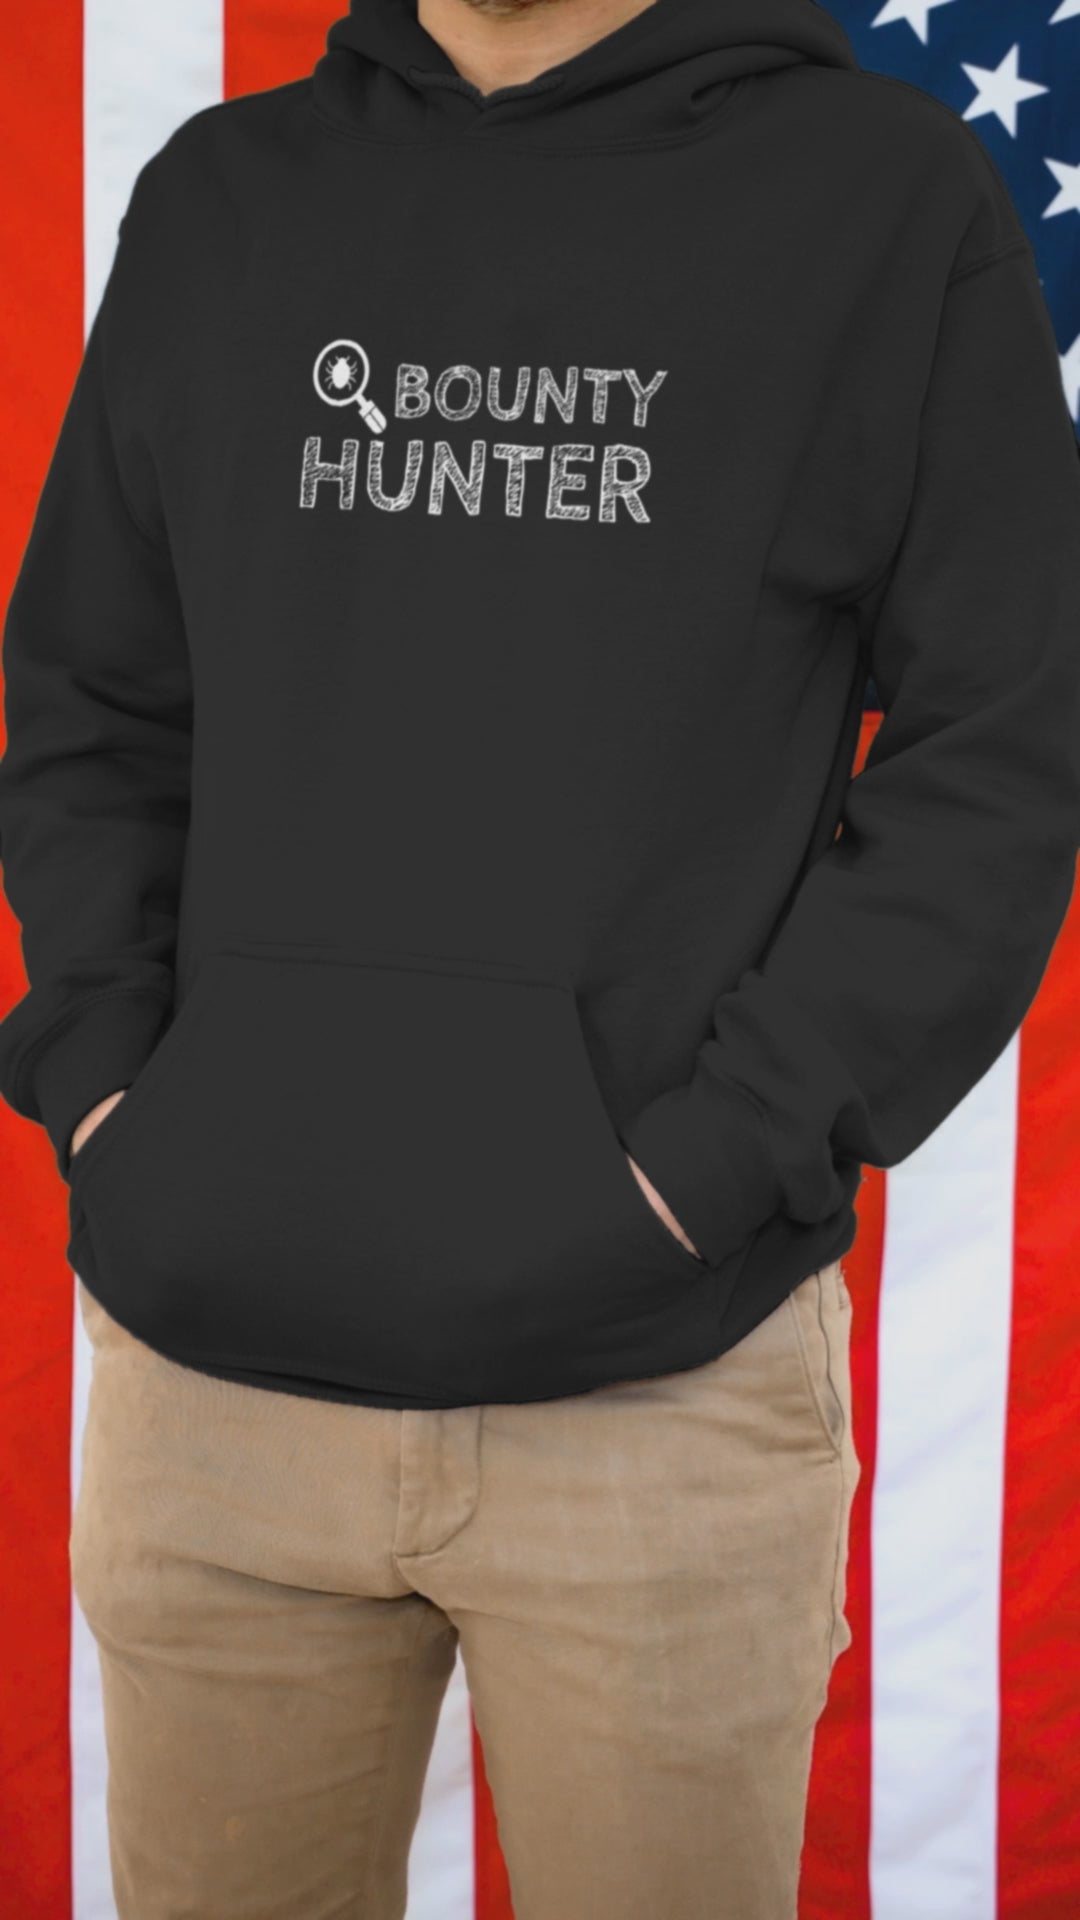 Bug bounty hunter - Hooded Sweatshirt (white text)